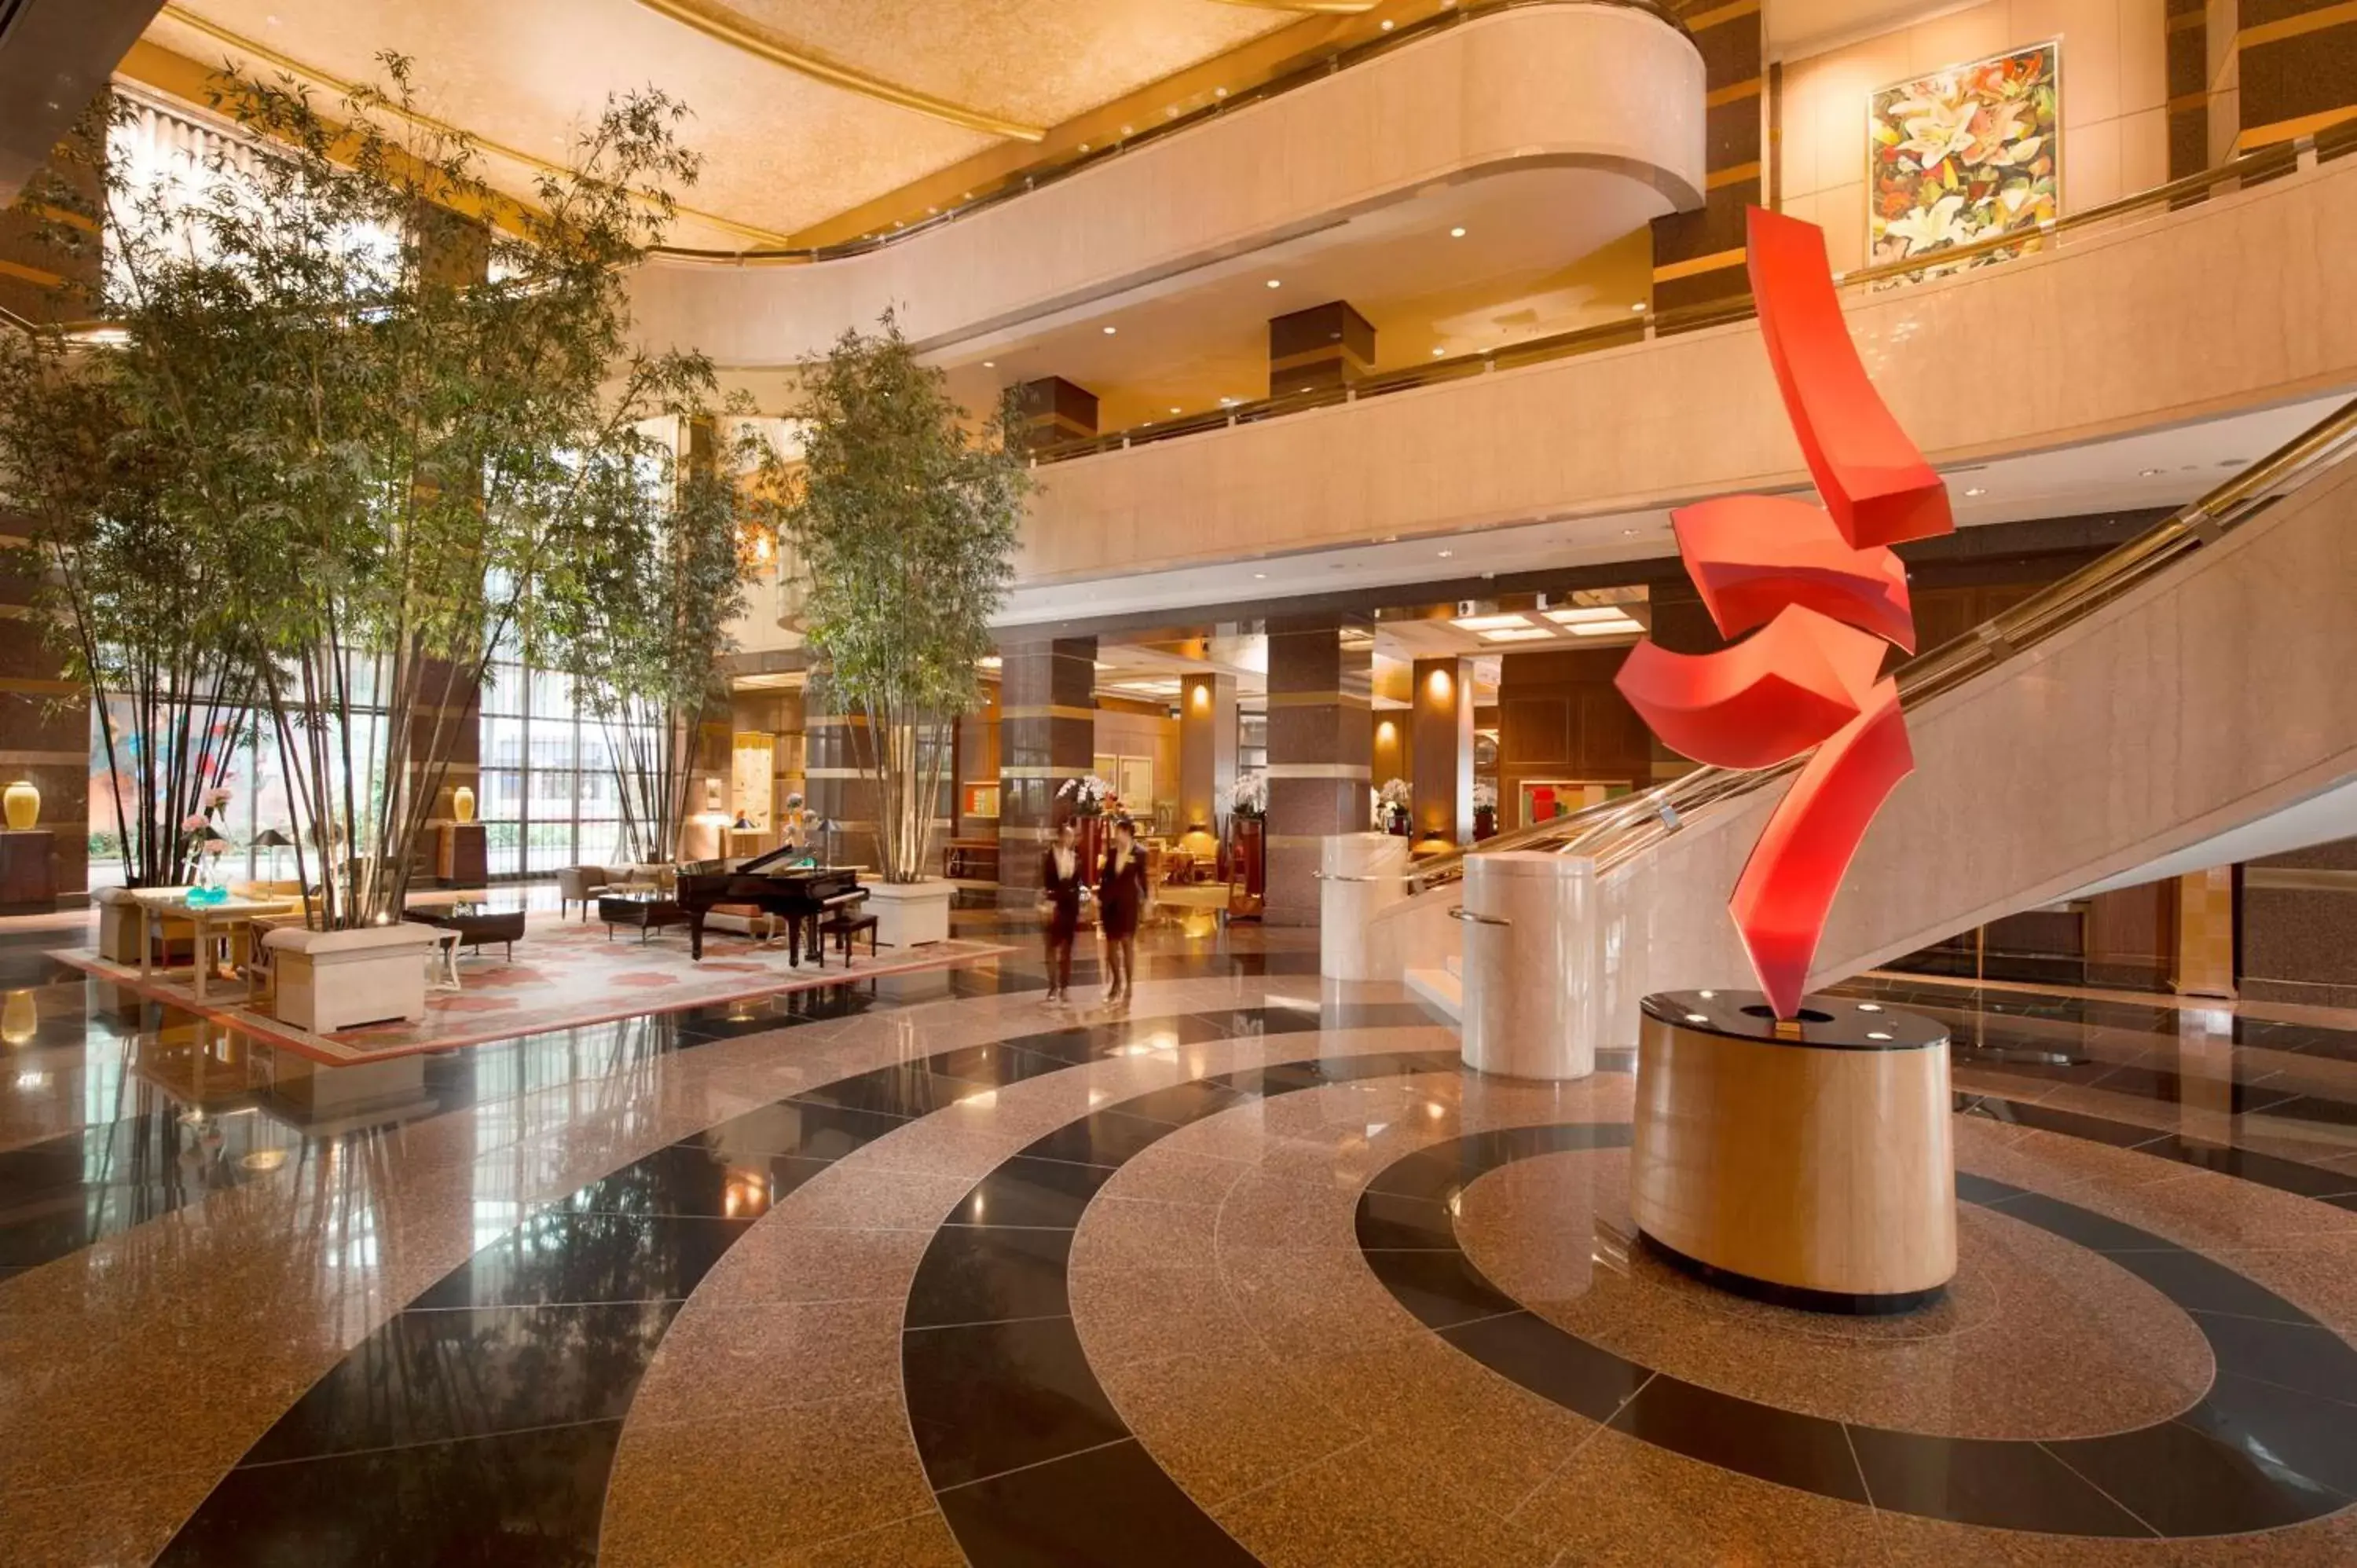 Lobby or reception in Conrad Centennial Singapore